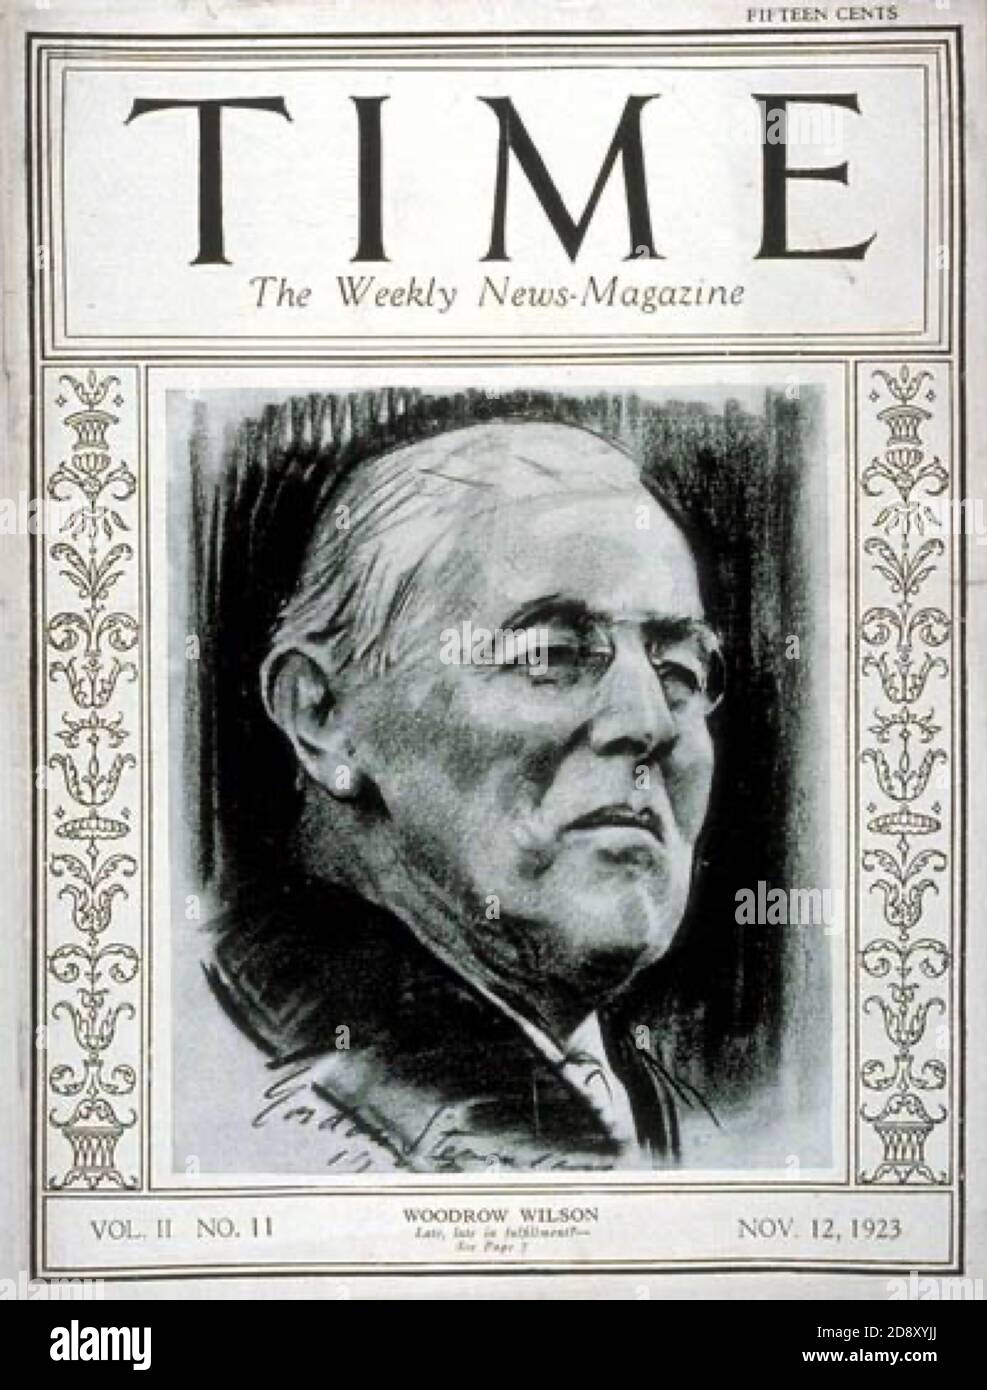 Portrait of the american president Woodrow Wilson on the cover of Time magazine. Cover Design - Gordon Stevenson Stock Photo